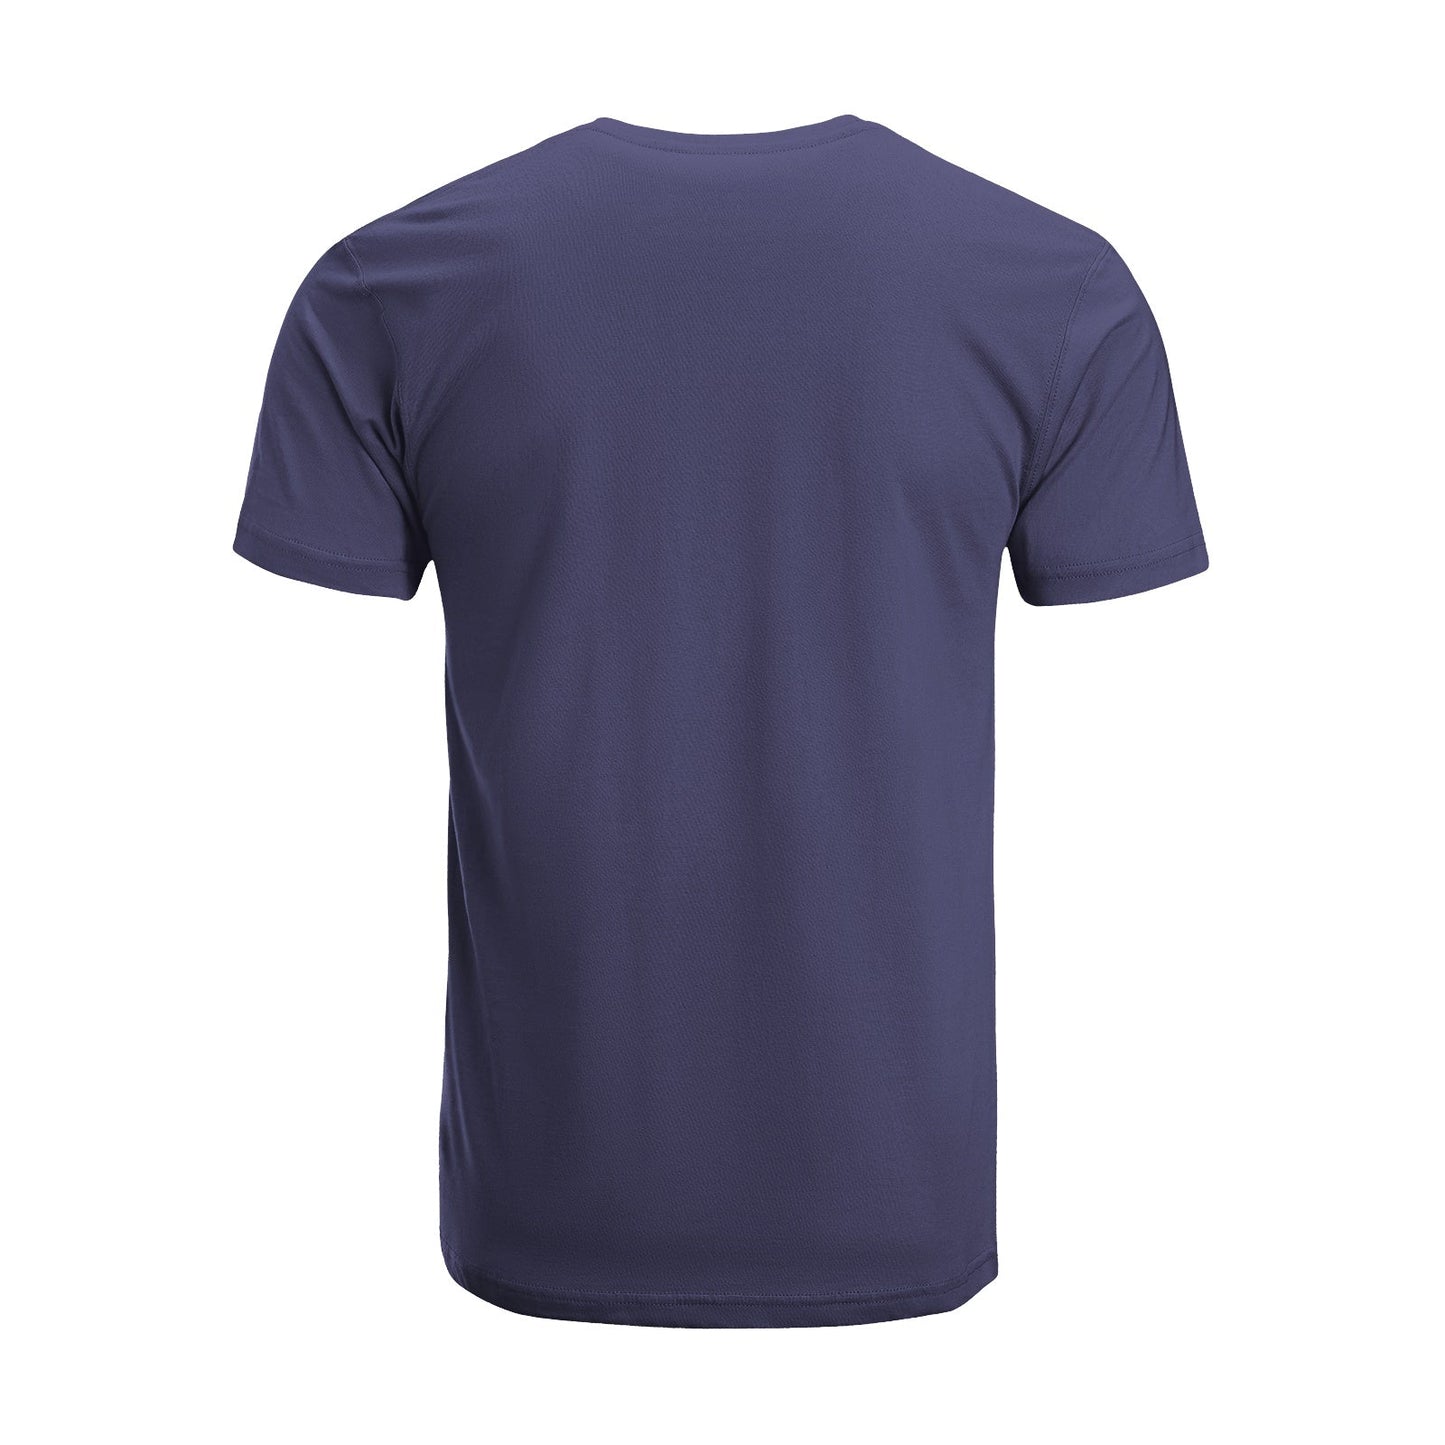 Unisex Short Sleeve Crew Neck Cotton Jersey T-Shirt CAT 07 - Tara-Outfits.com